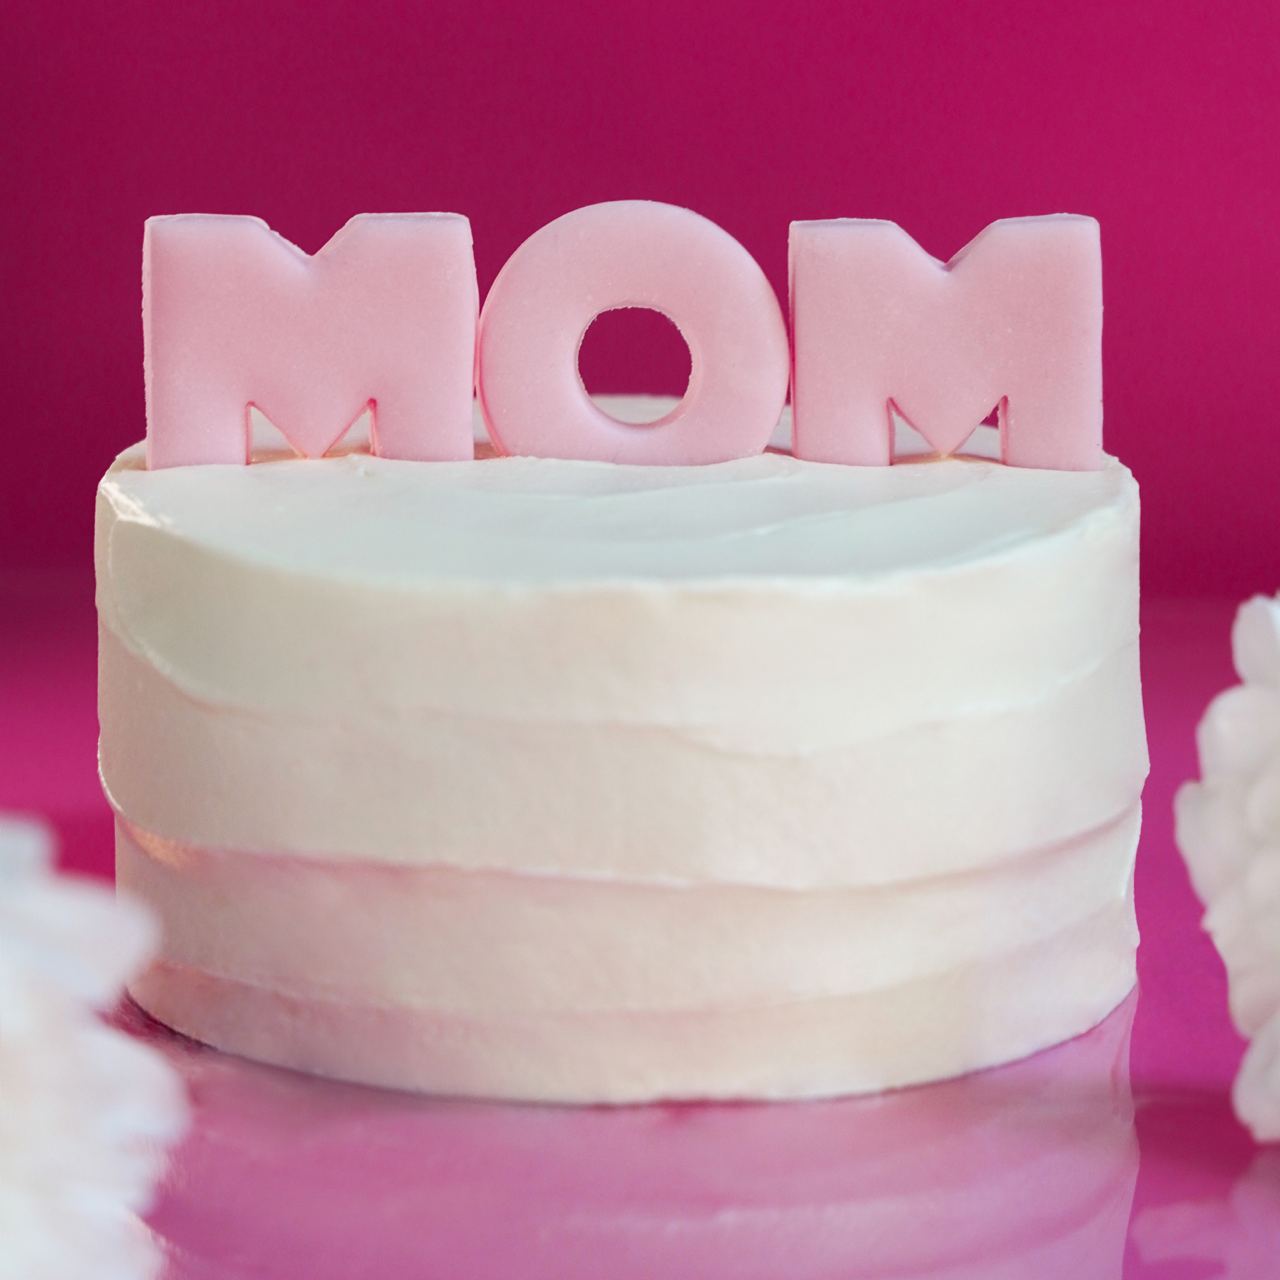 MOM CAKE